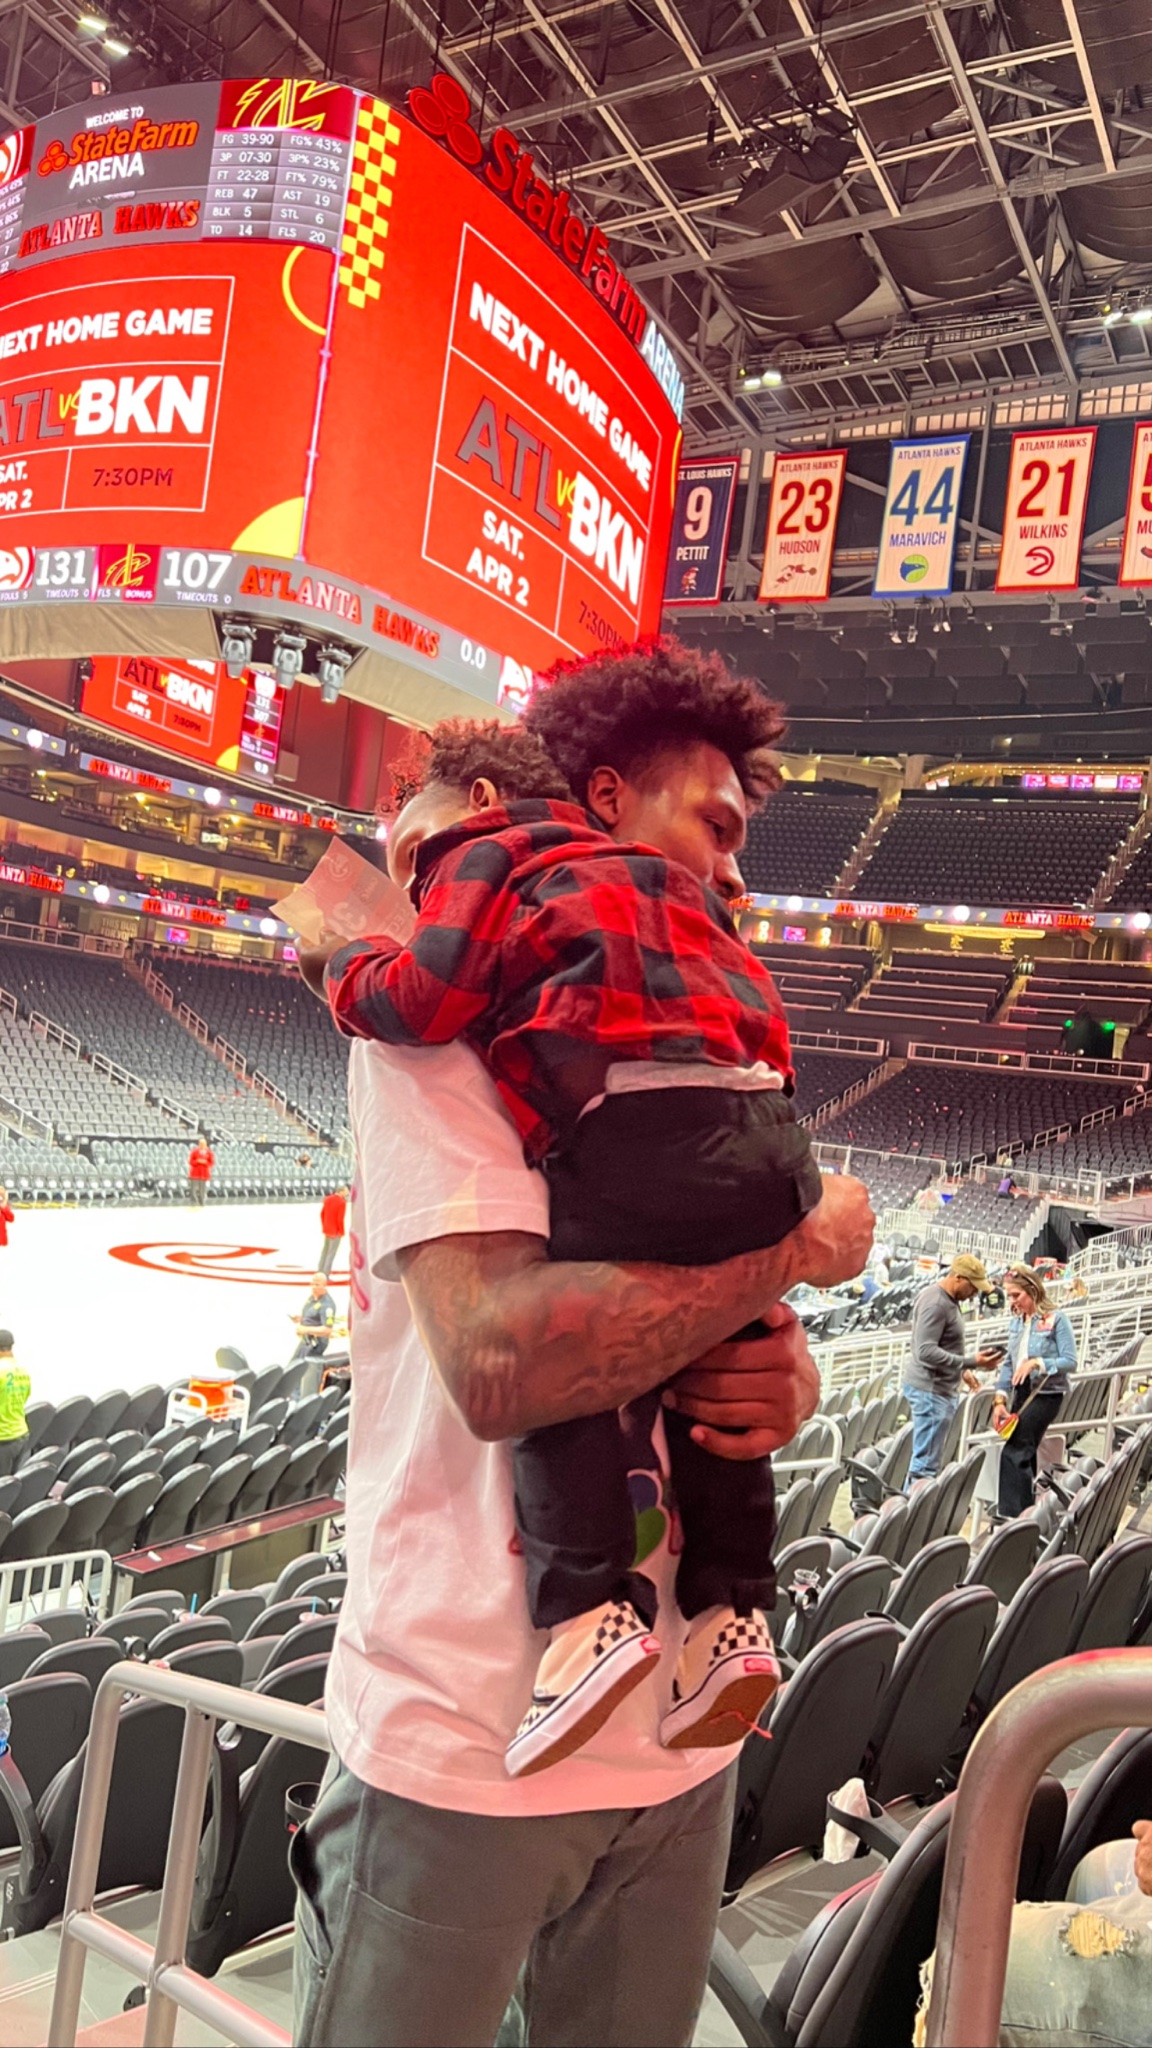 Brandon carrying his son